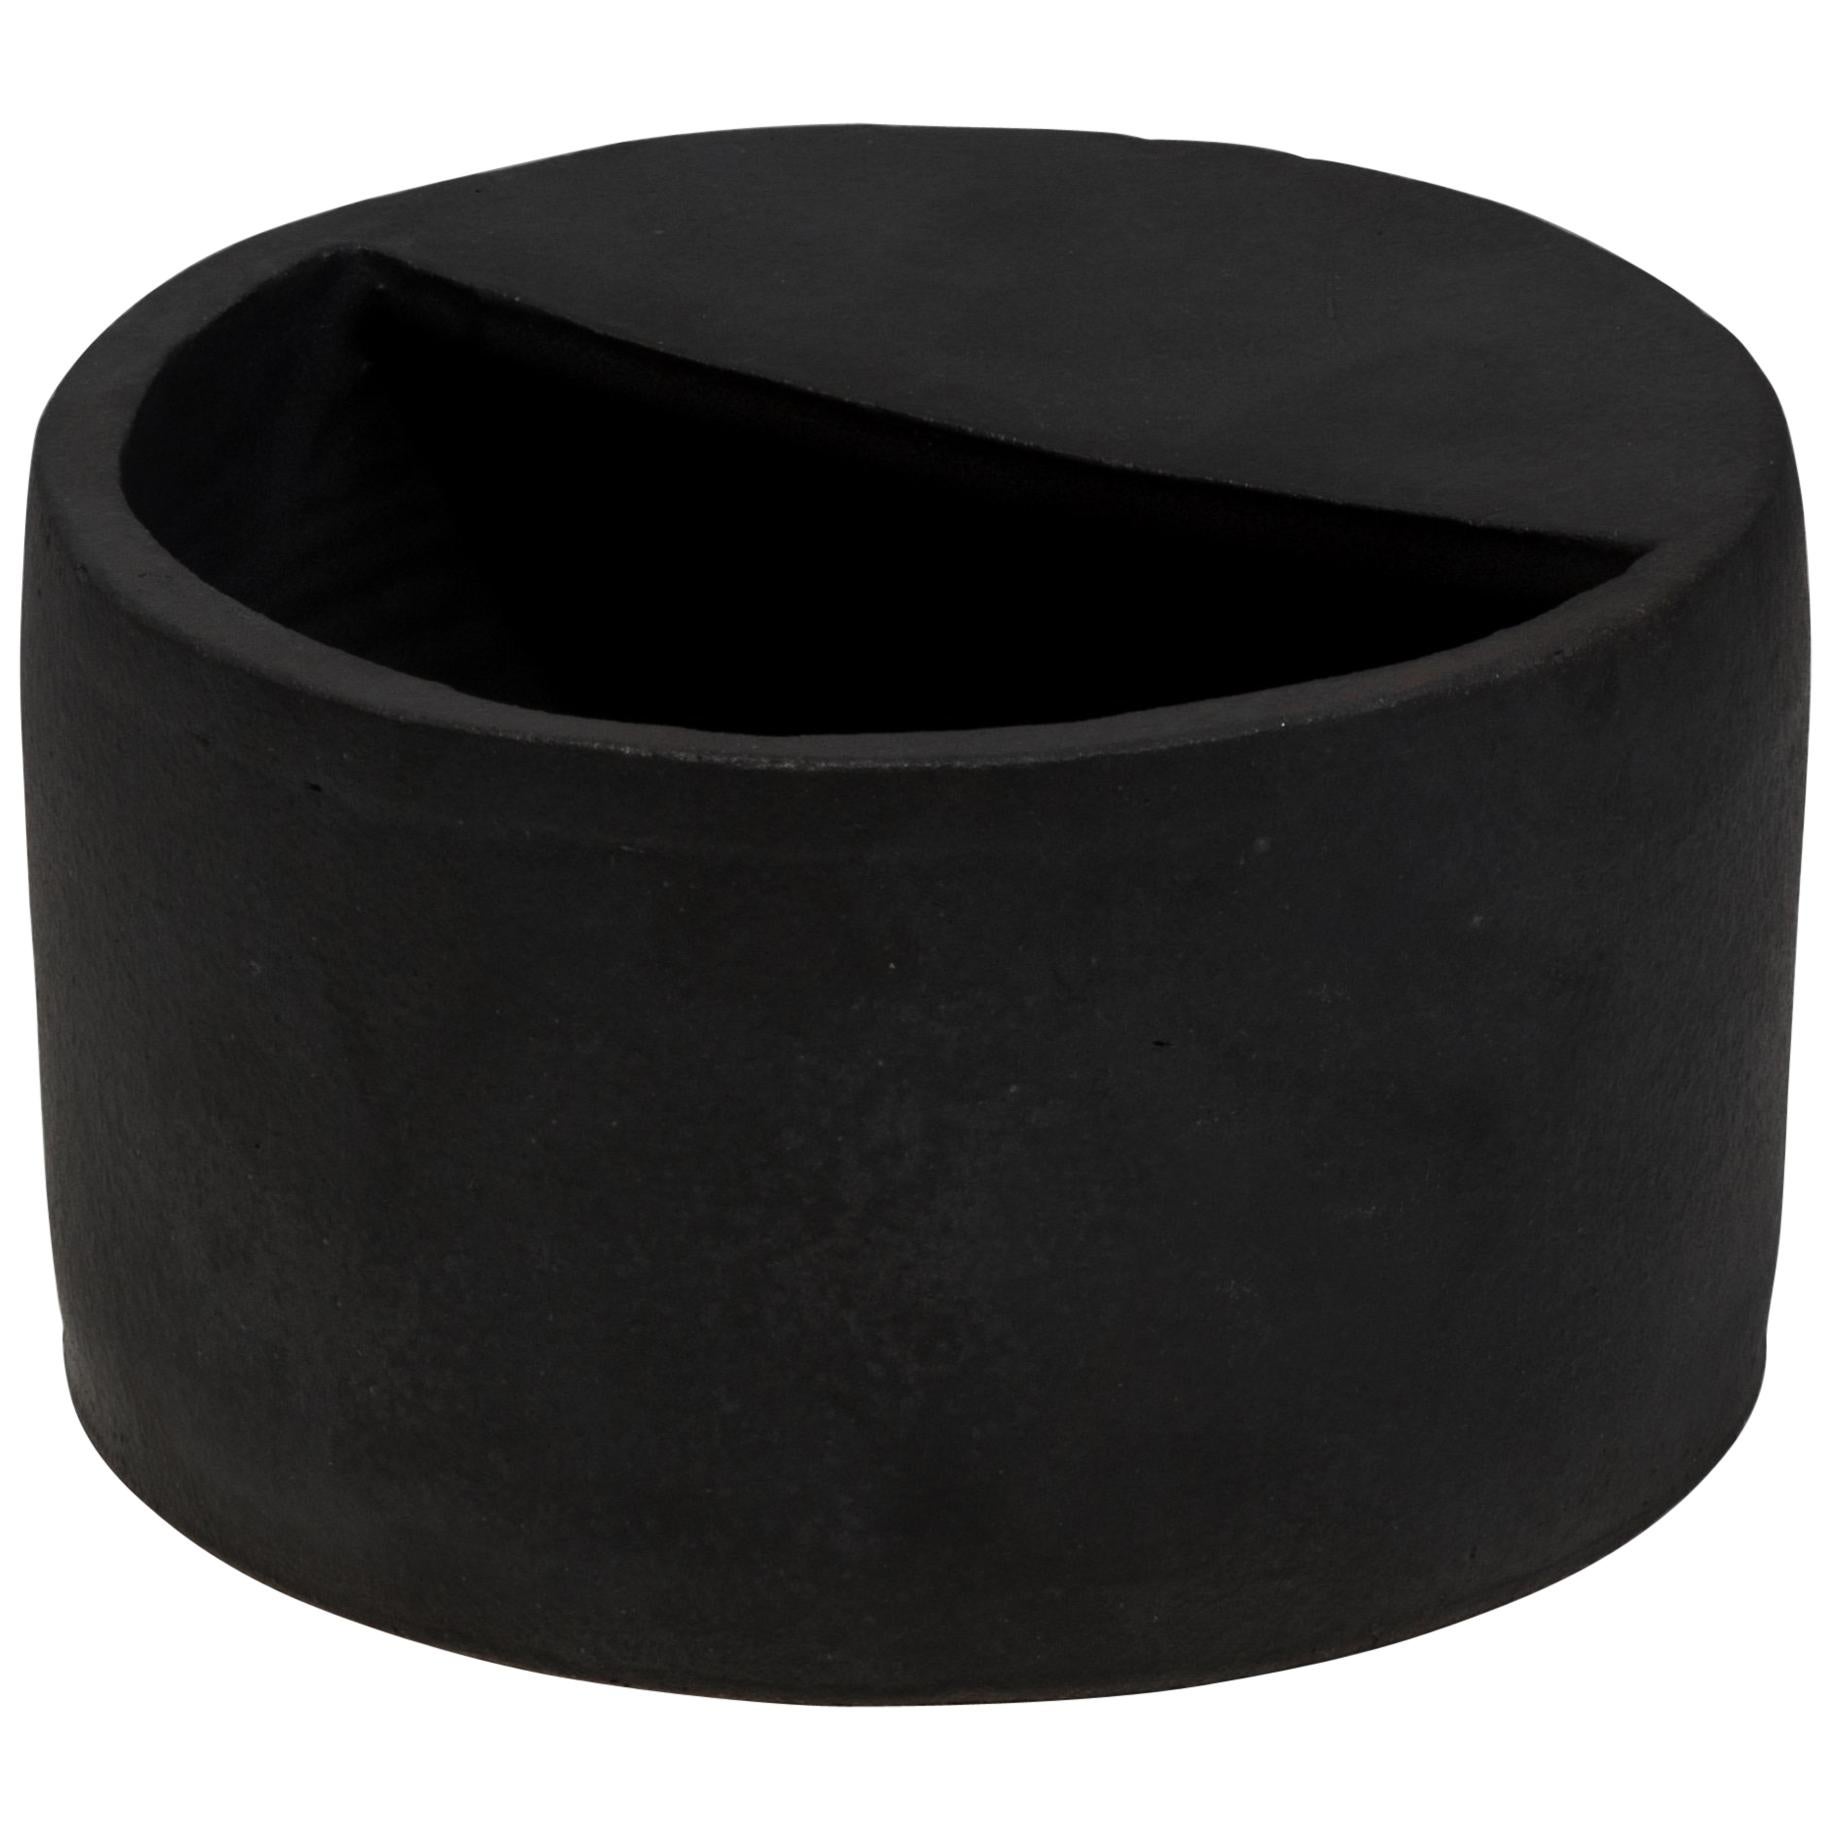 Jonathan Nesci w/ Robert Pulley Ceramic Vessel with Black Coppered Glaze 18/06